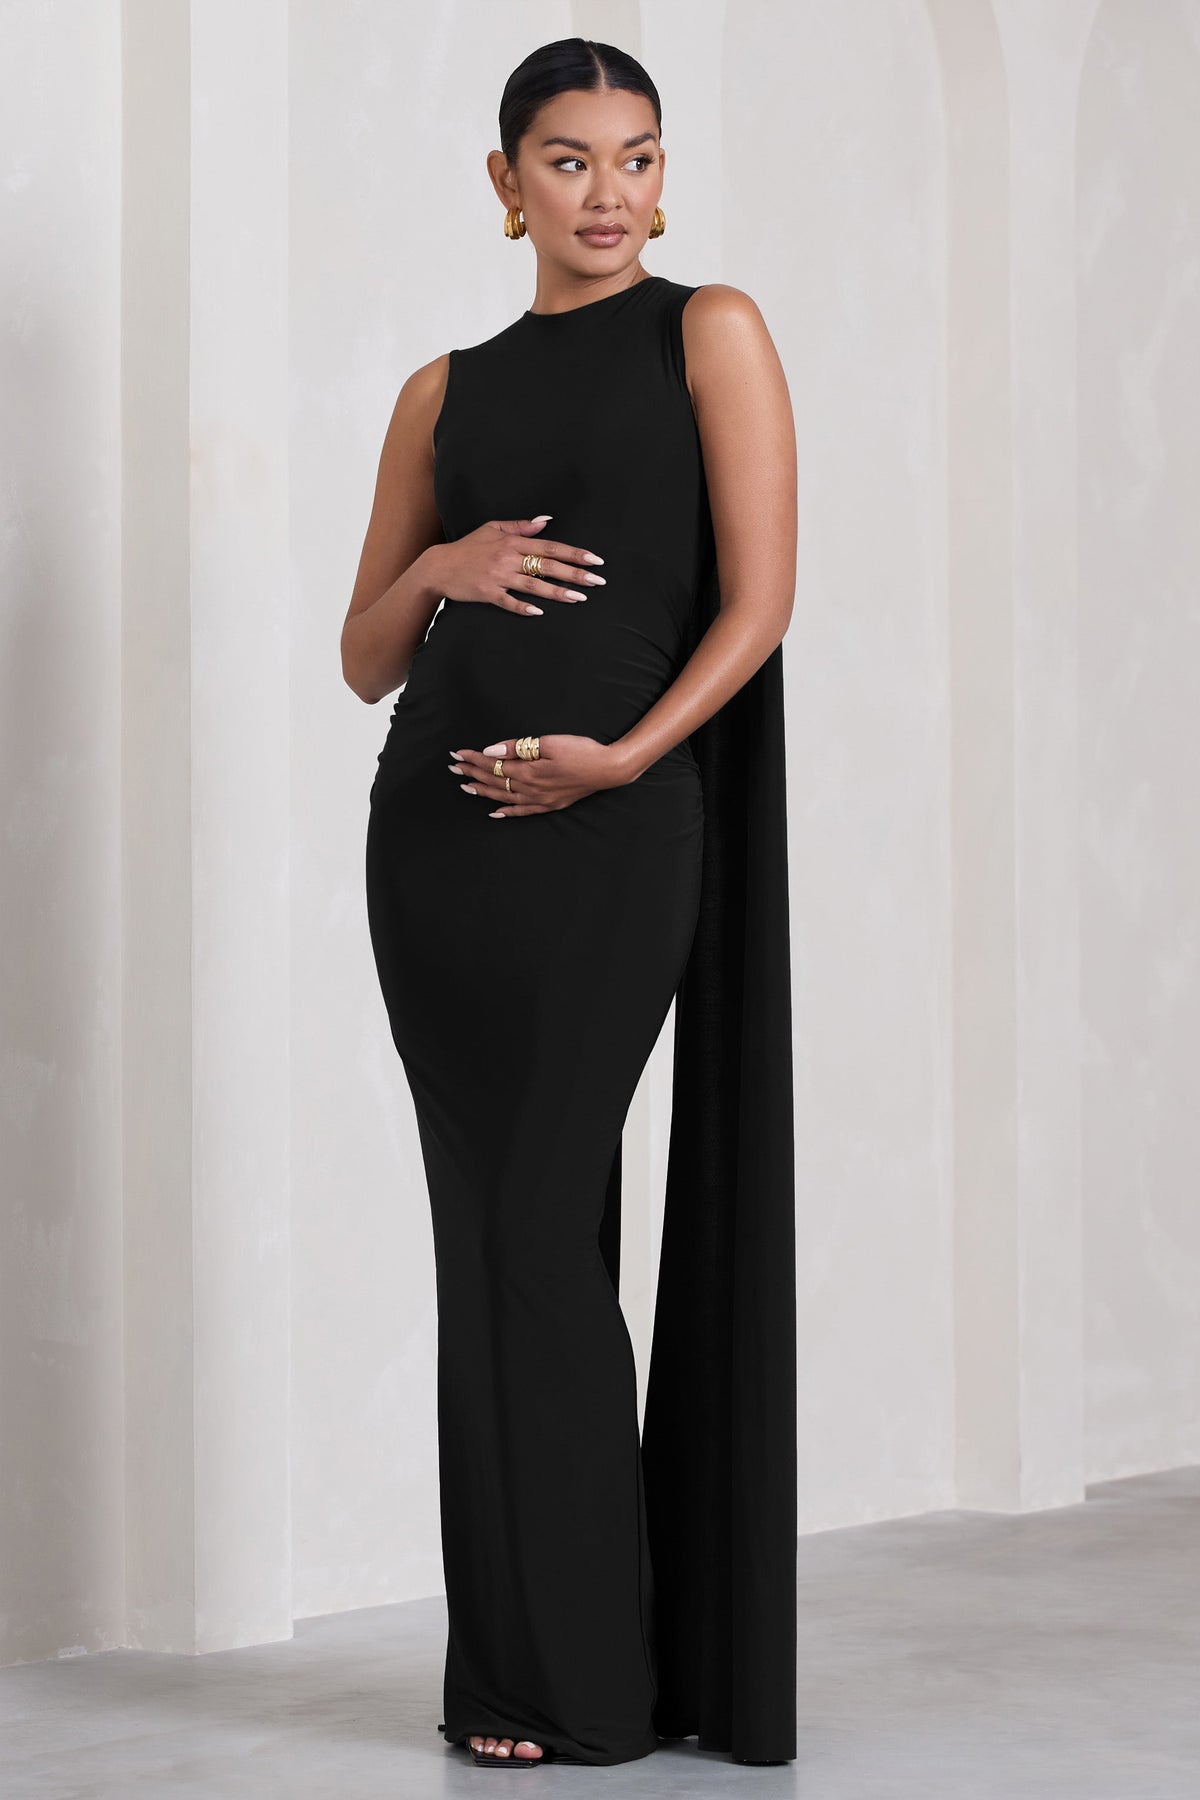 Alora Maternity Maxi Dress in Black